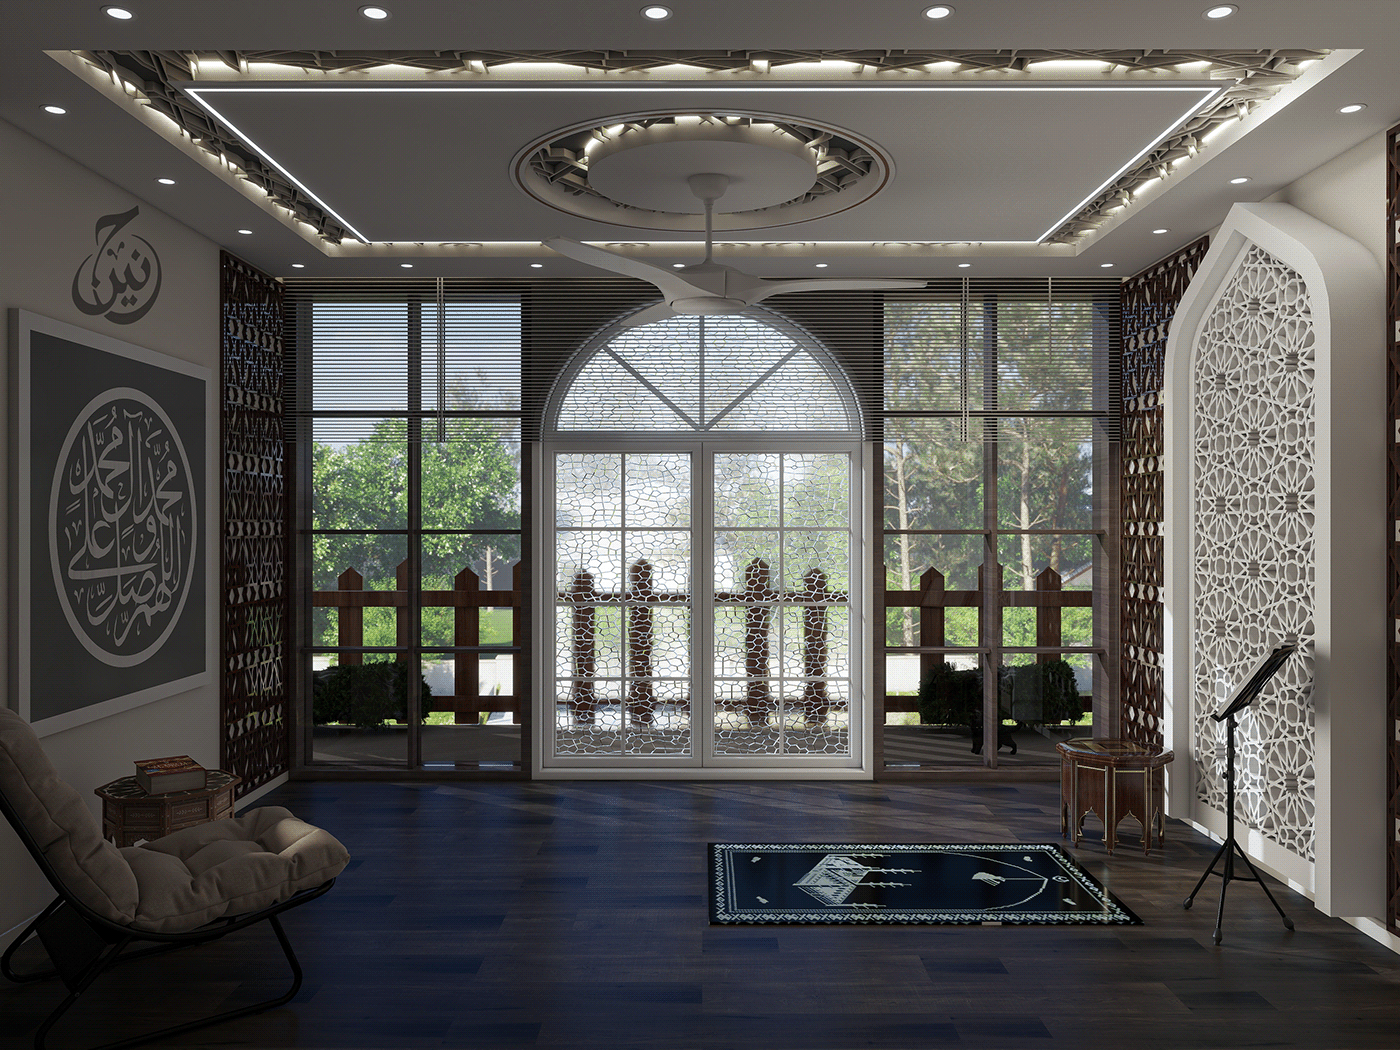 design Prayer room architecture interior design  Render modern islamic decor Interior coohom